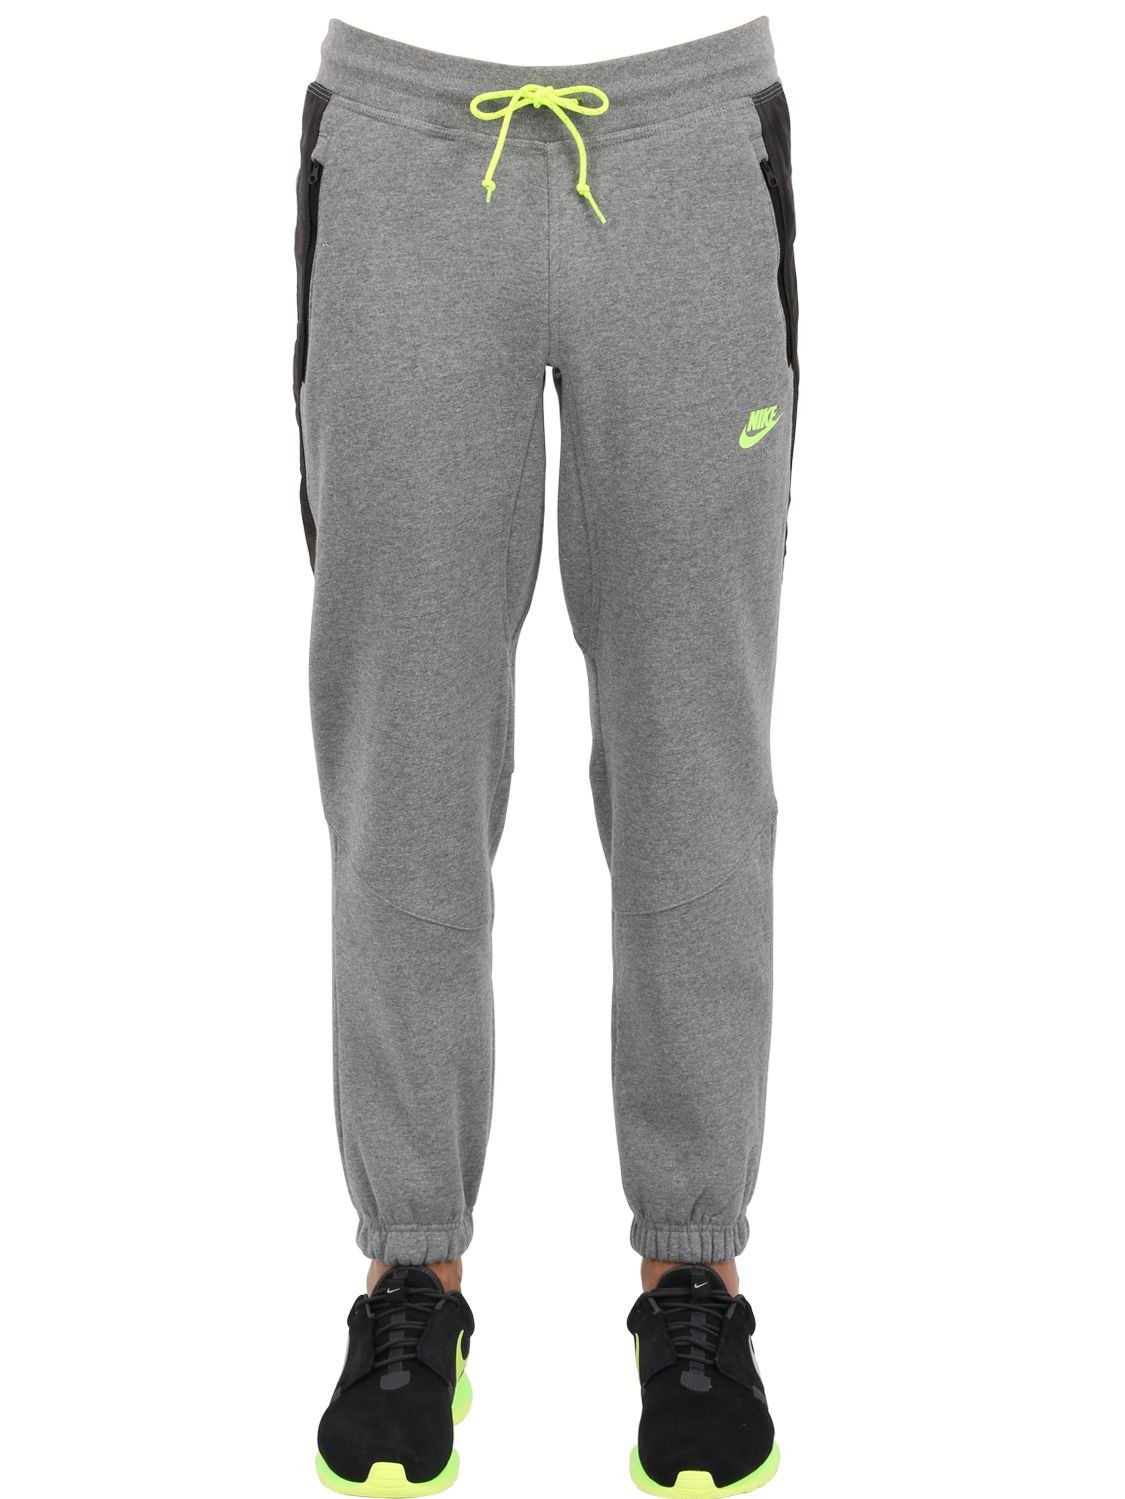 Nike Hybrid Oversized Cotton Jogging Pants in Gray for Men - Lyst